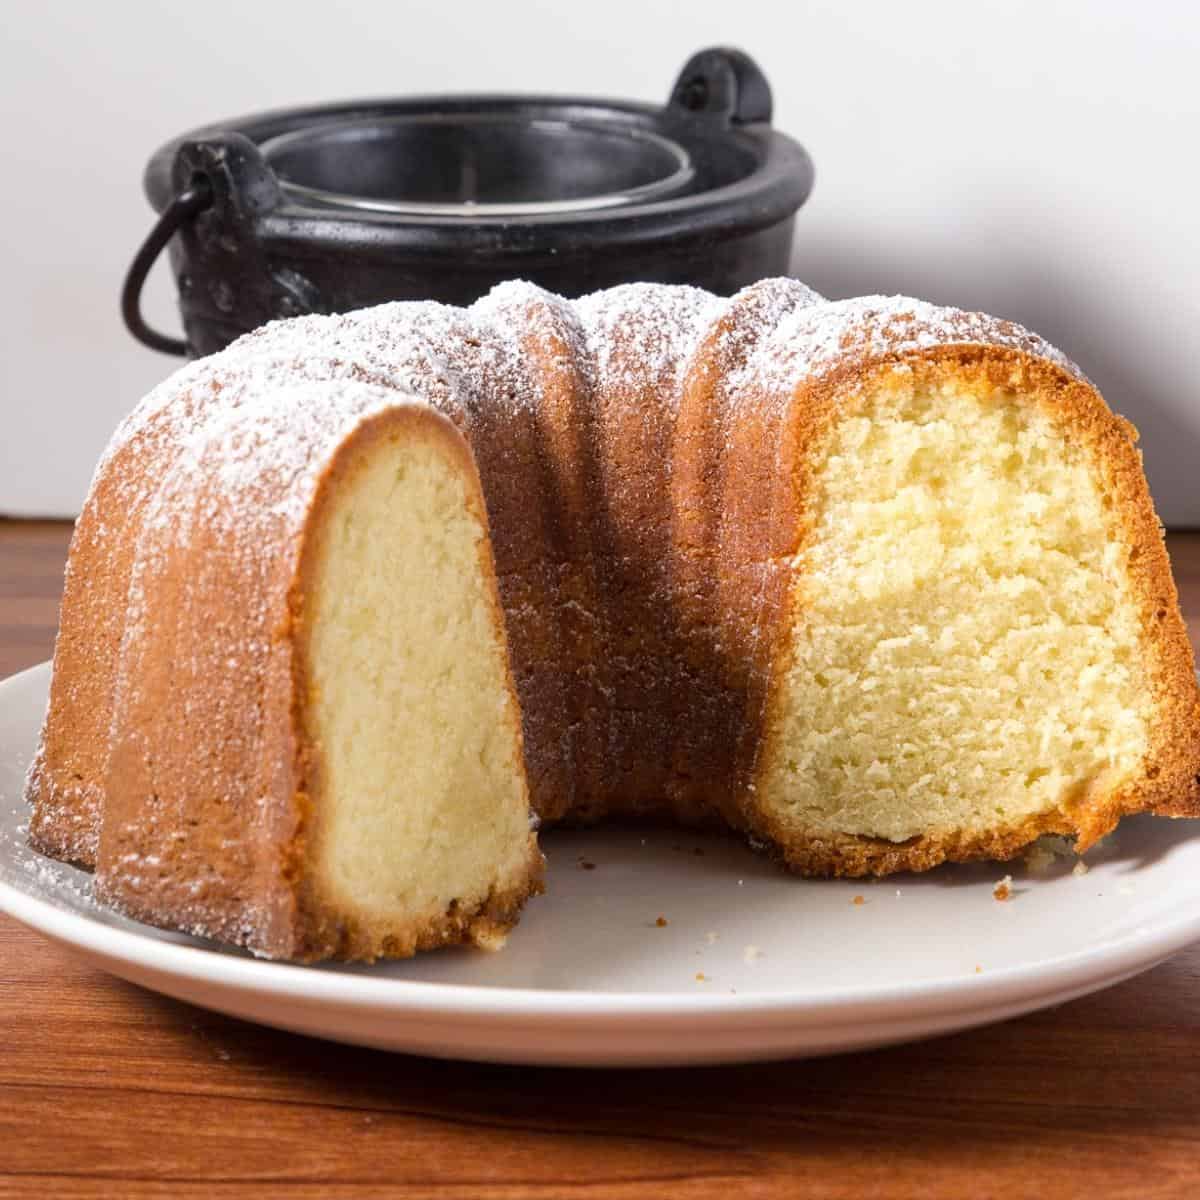 A cut vanilla bundt cake on a plate.